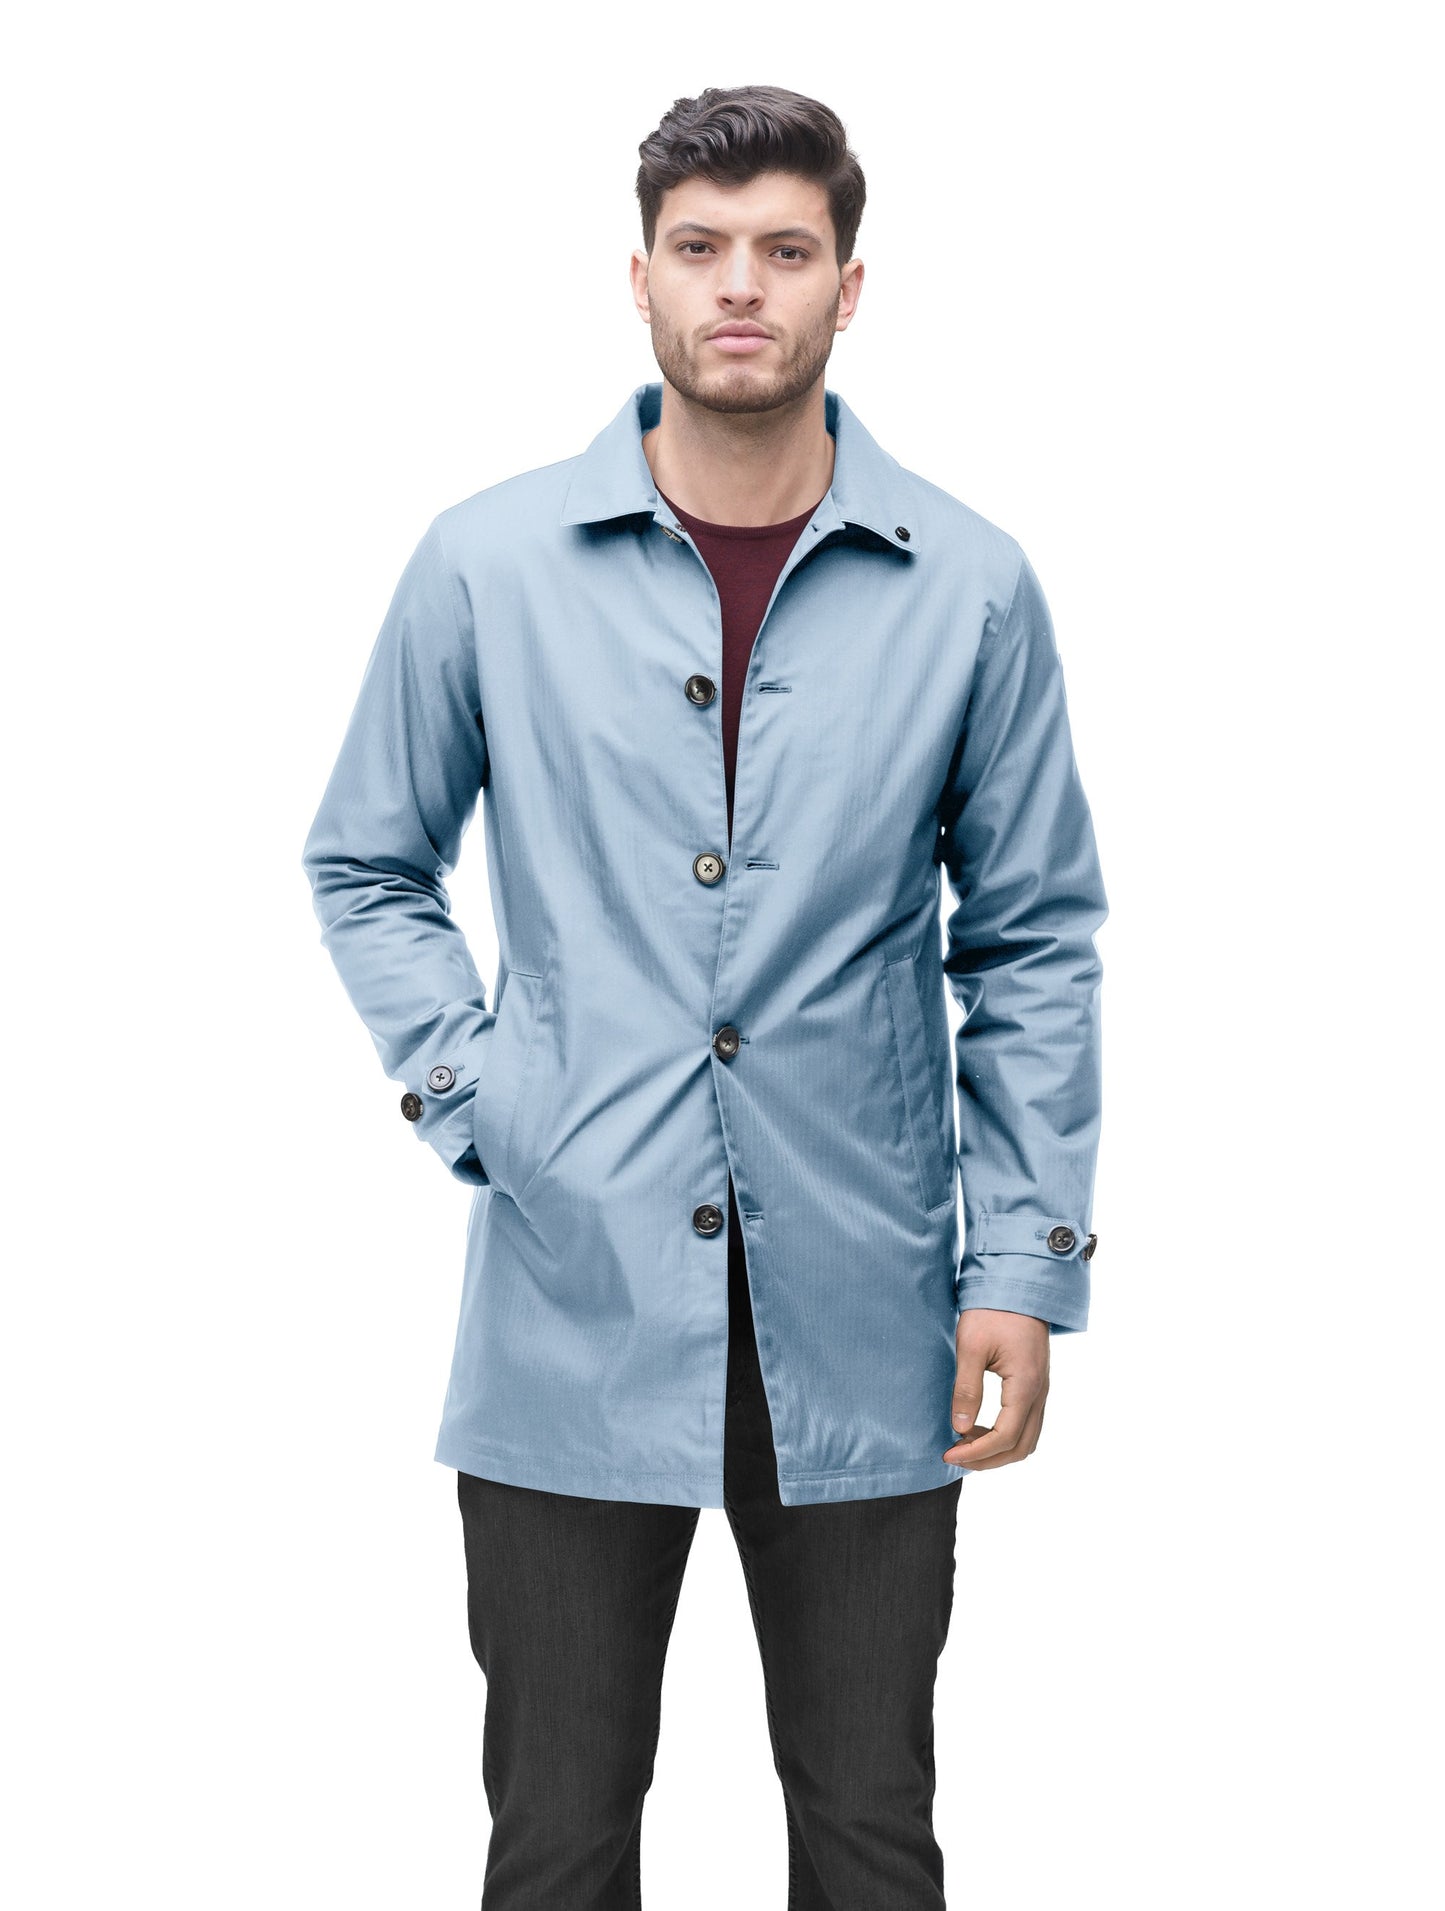 Men's Macintosh style raincoat in Slate Blue